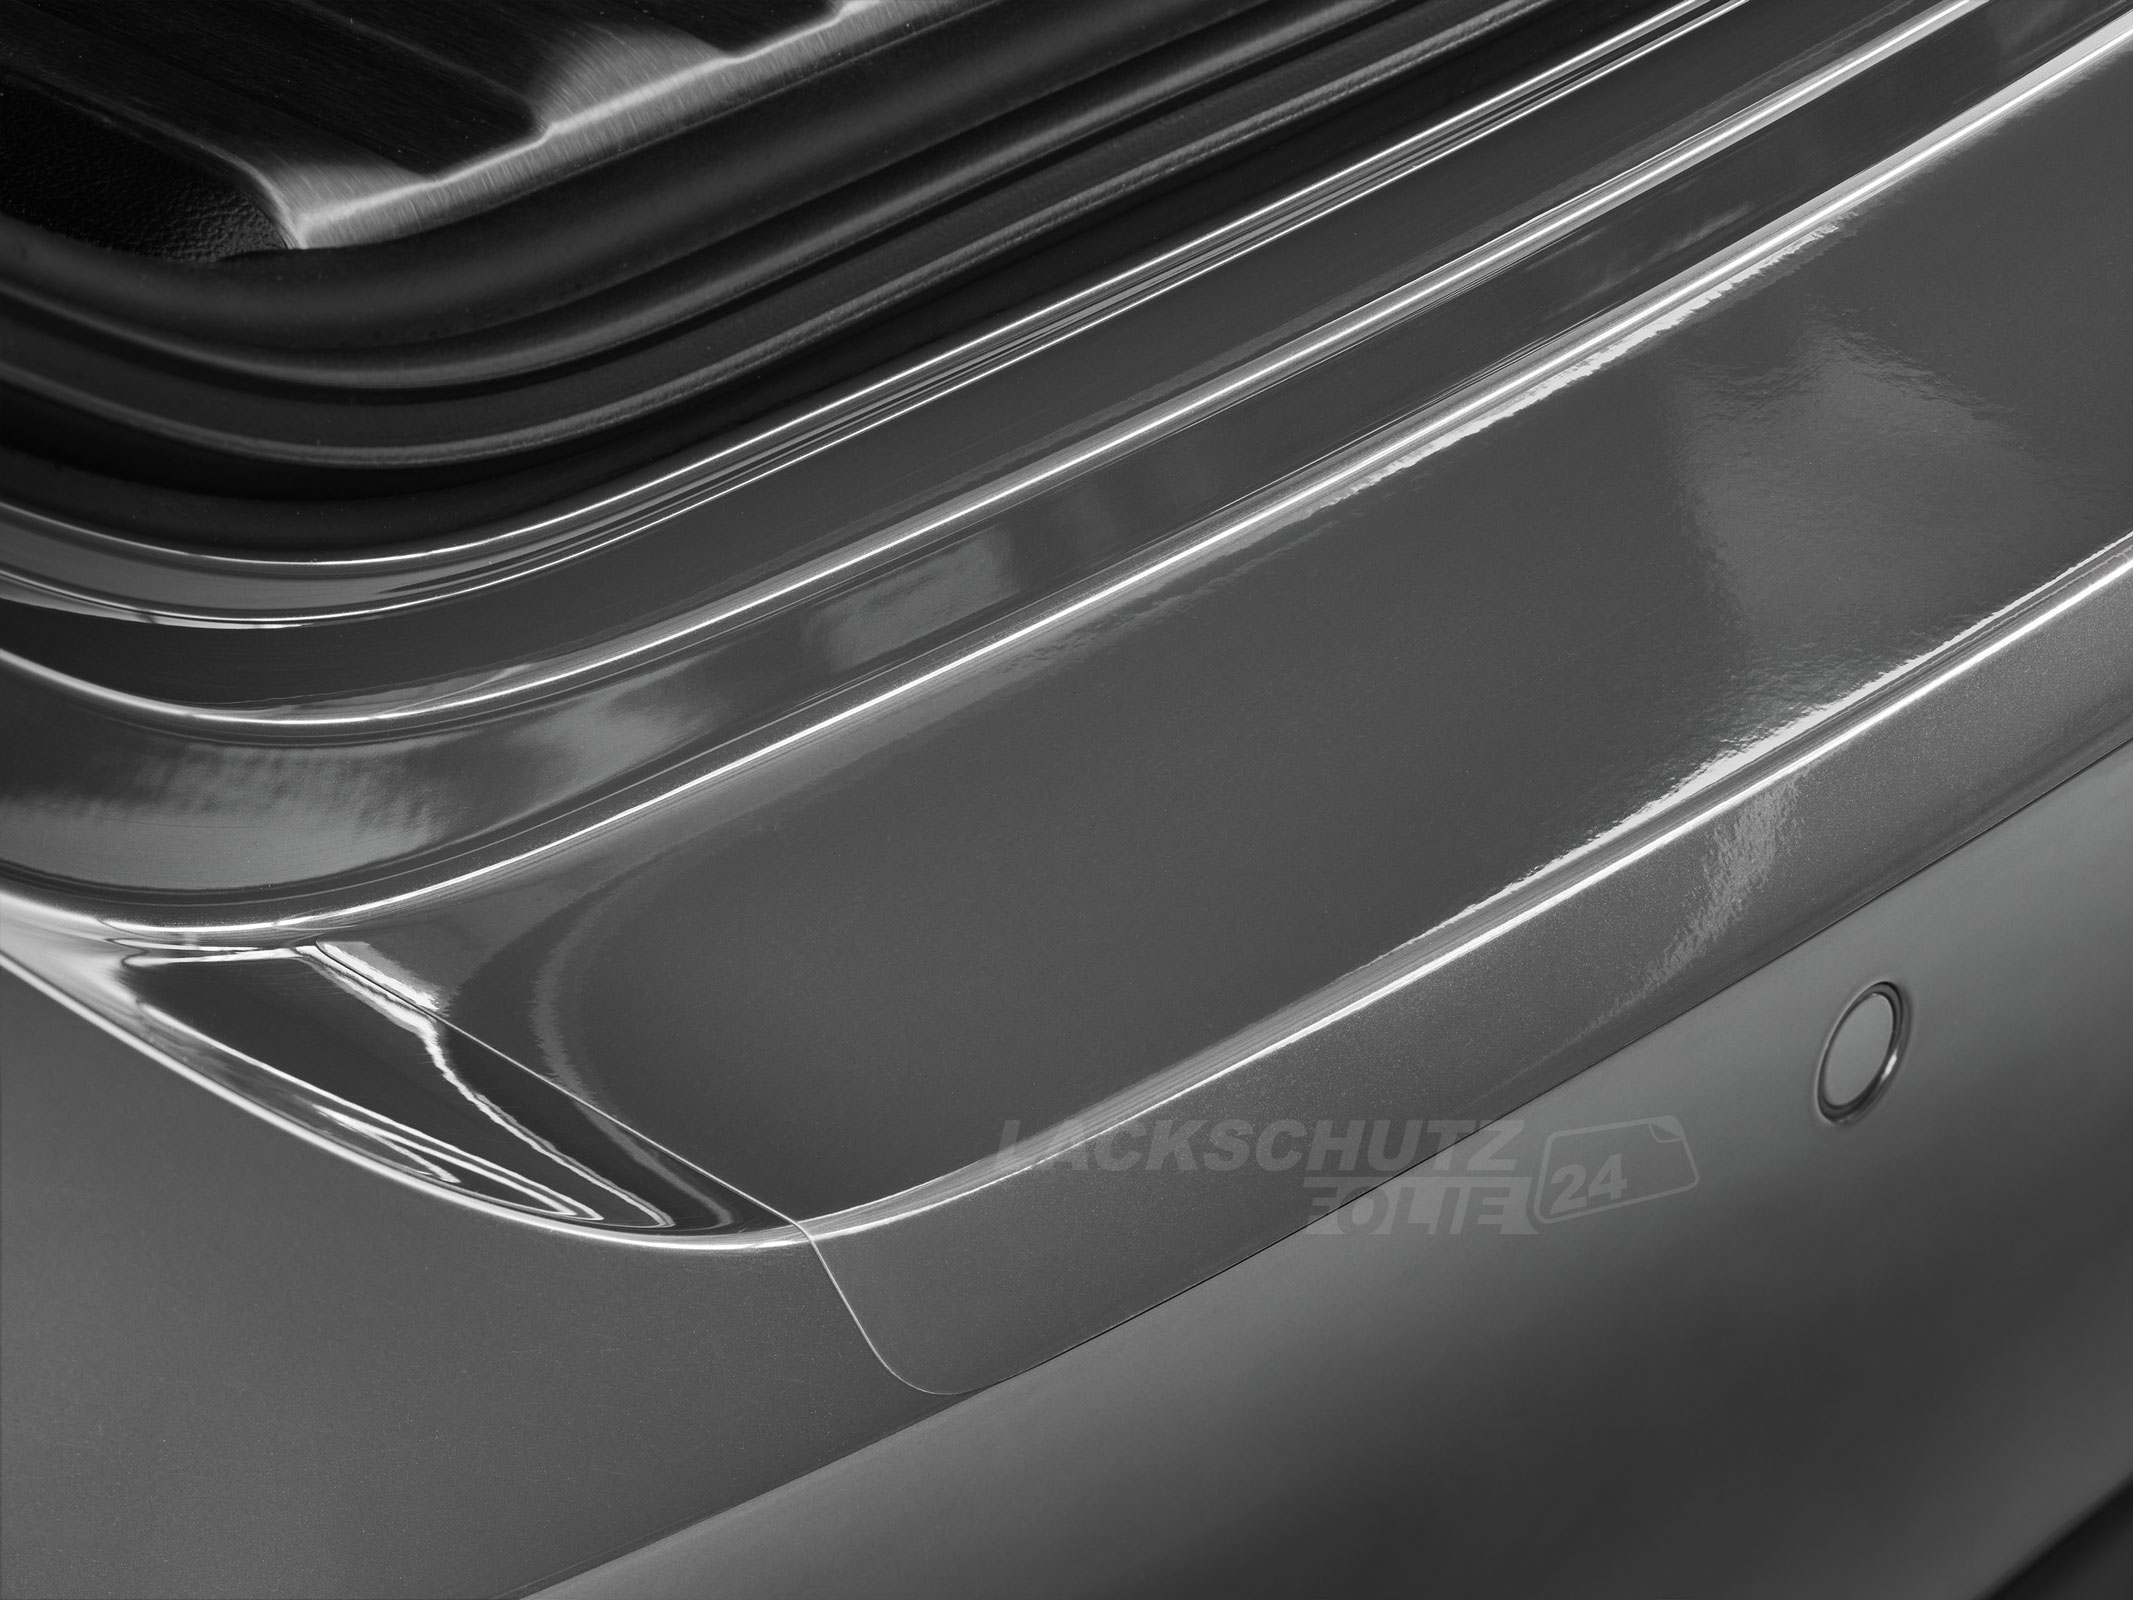 Ladekantenschutzfolie - Transparent Glatt Hochglänzend 240 µm stark für Opel Astra OPC Typ H, BJ 2005-2010